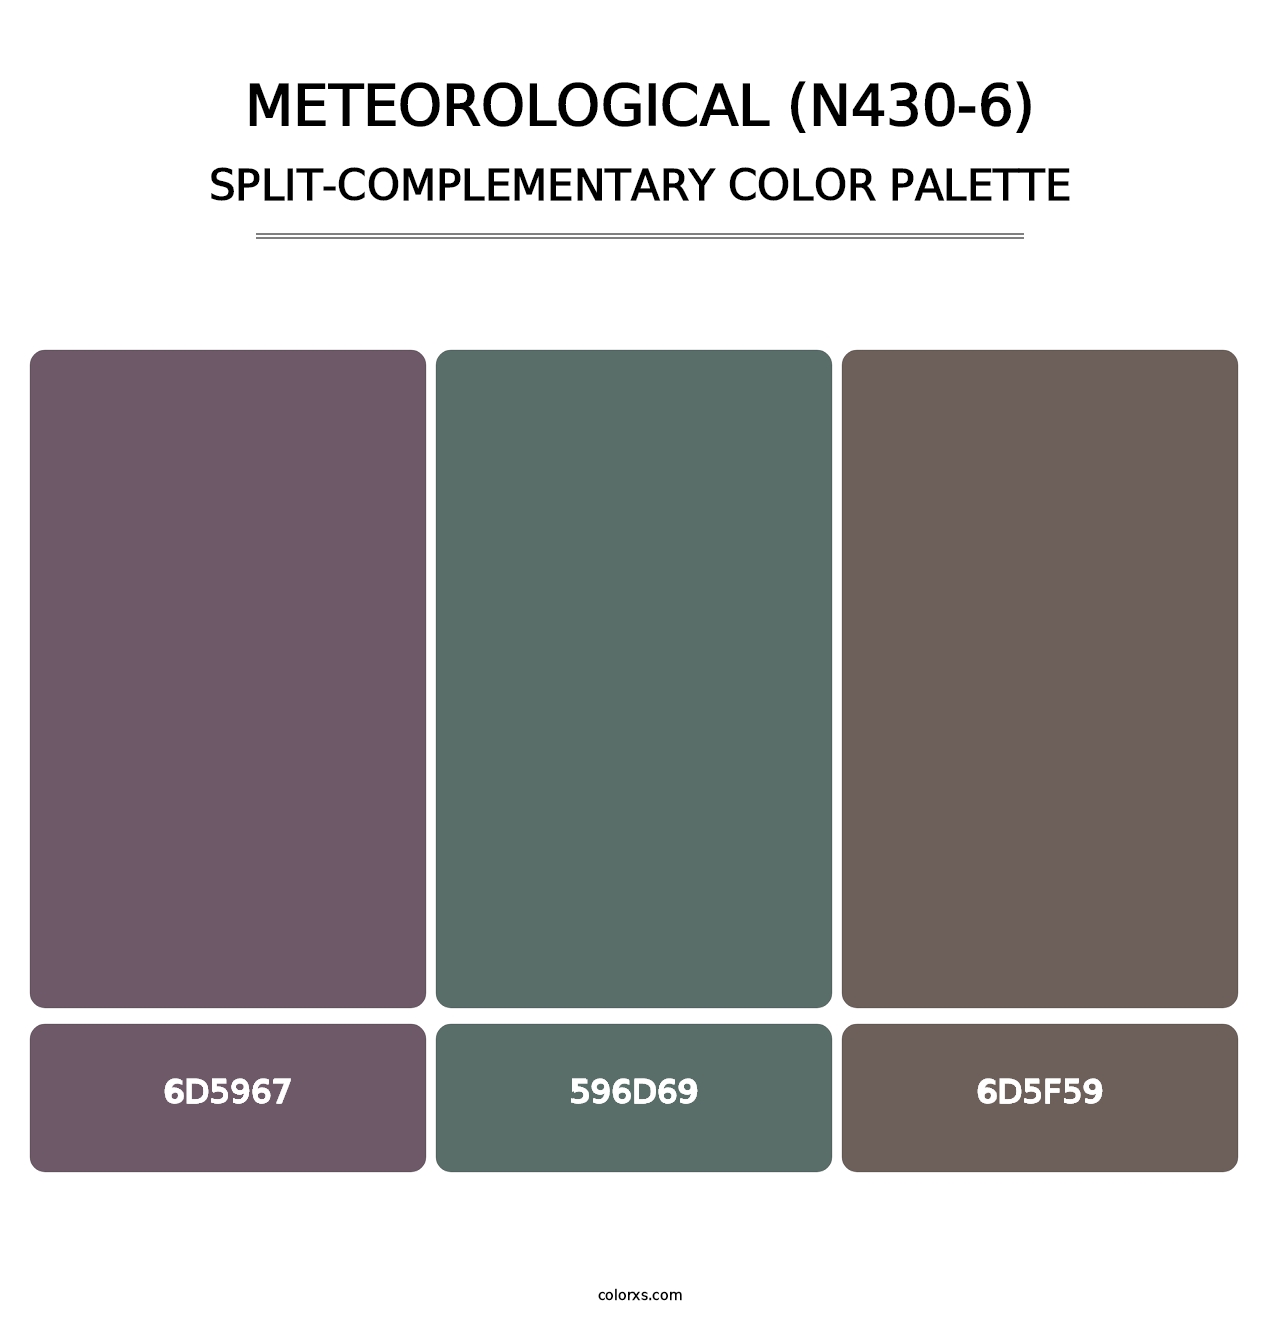 Meteorological (N430-6) - Split-Complementary Color Palette